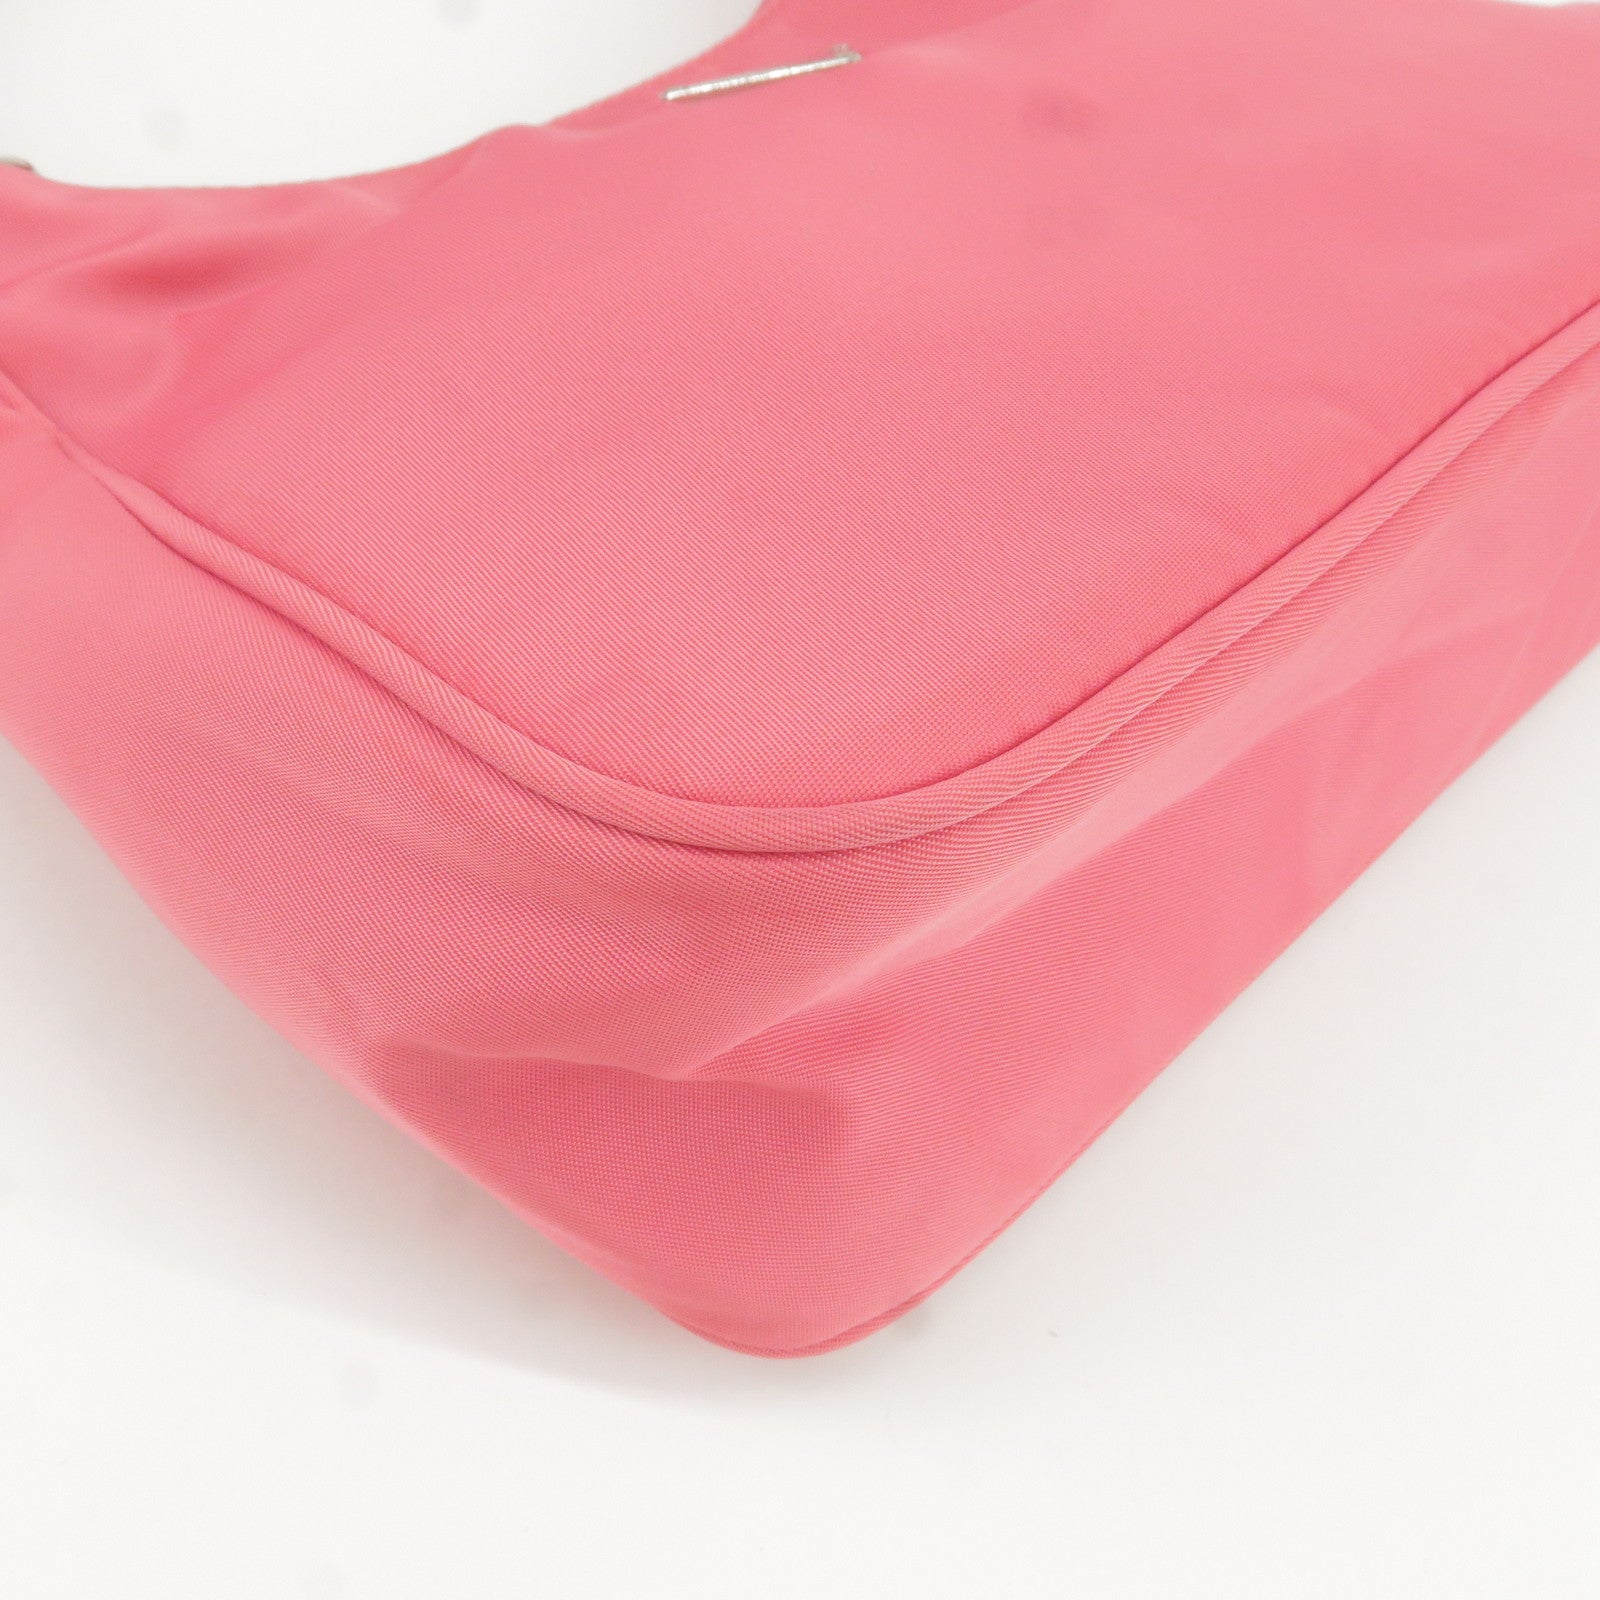 Irrigatie Schuldig Onbepaald Hand - Purse - PRADA - Canvas - Pouch - neck dress - print tie - Bag - Logo  - Prada and adidas upcoming collaboration - Nylon - MV519 – Prada lips -  Pink